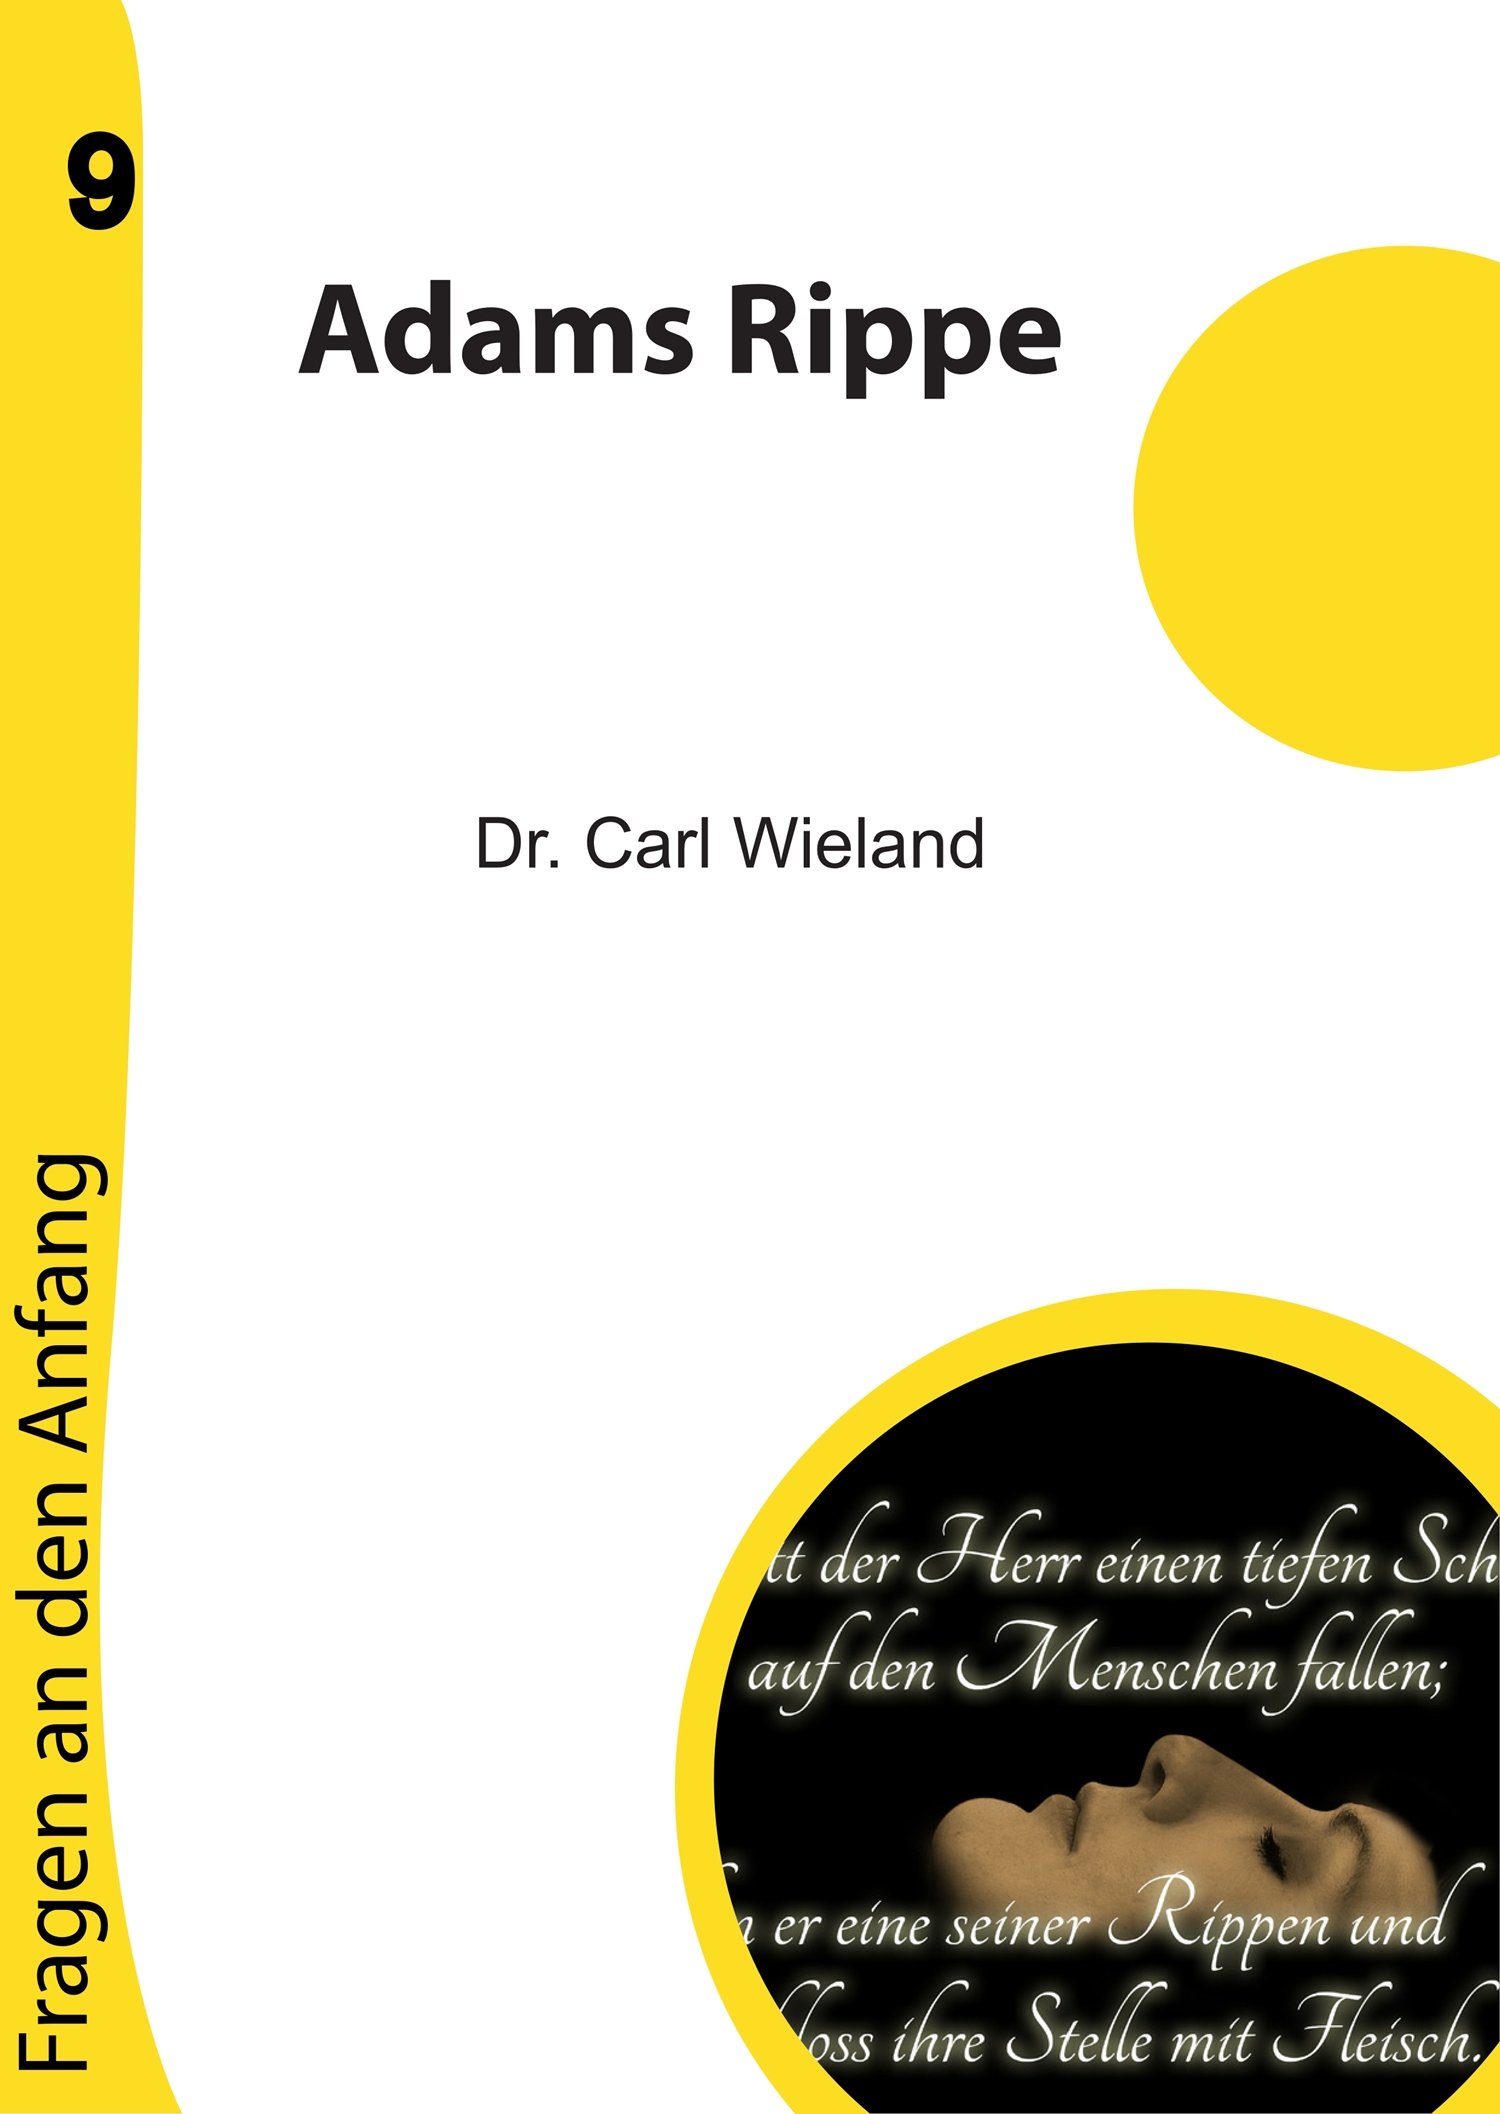 09 Adams Rippe.jpg